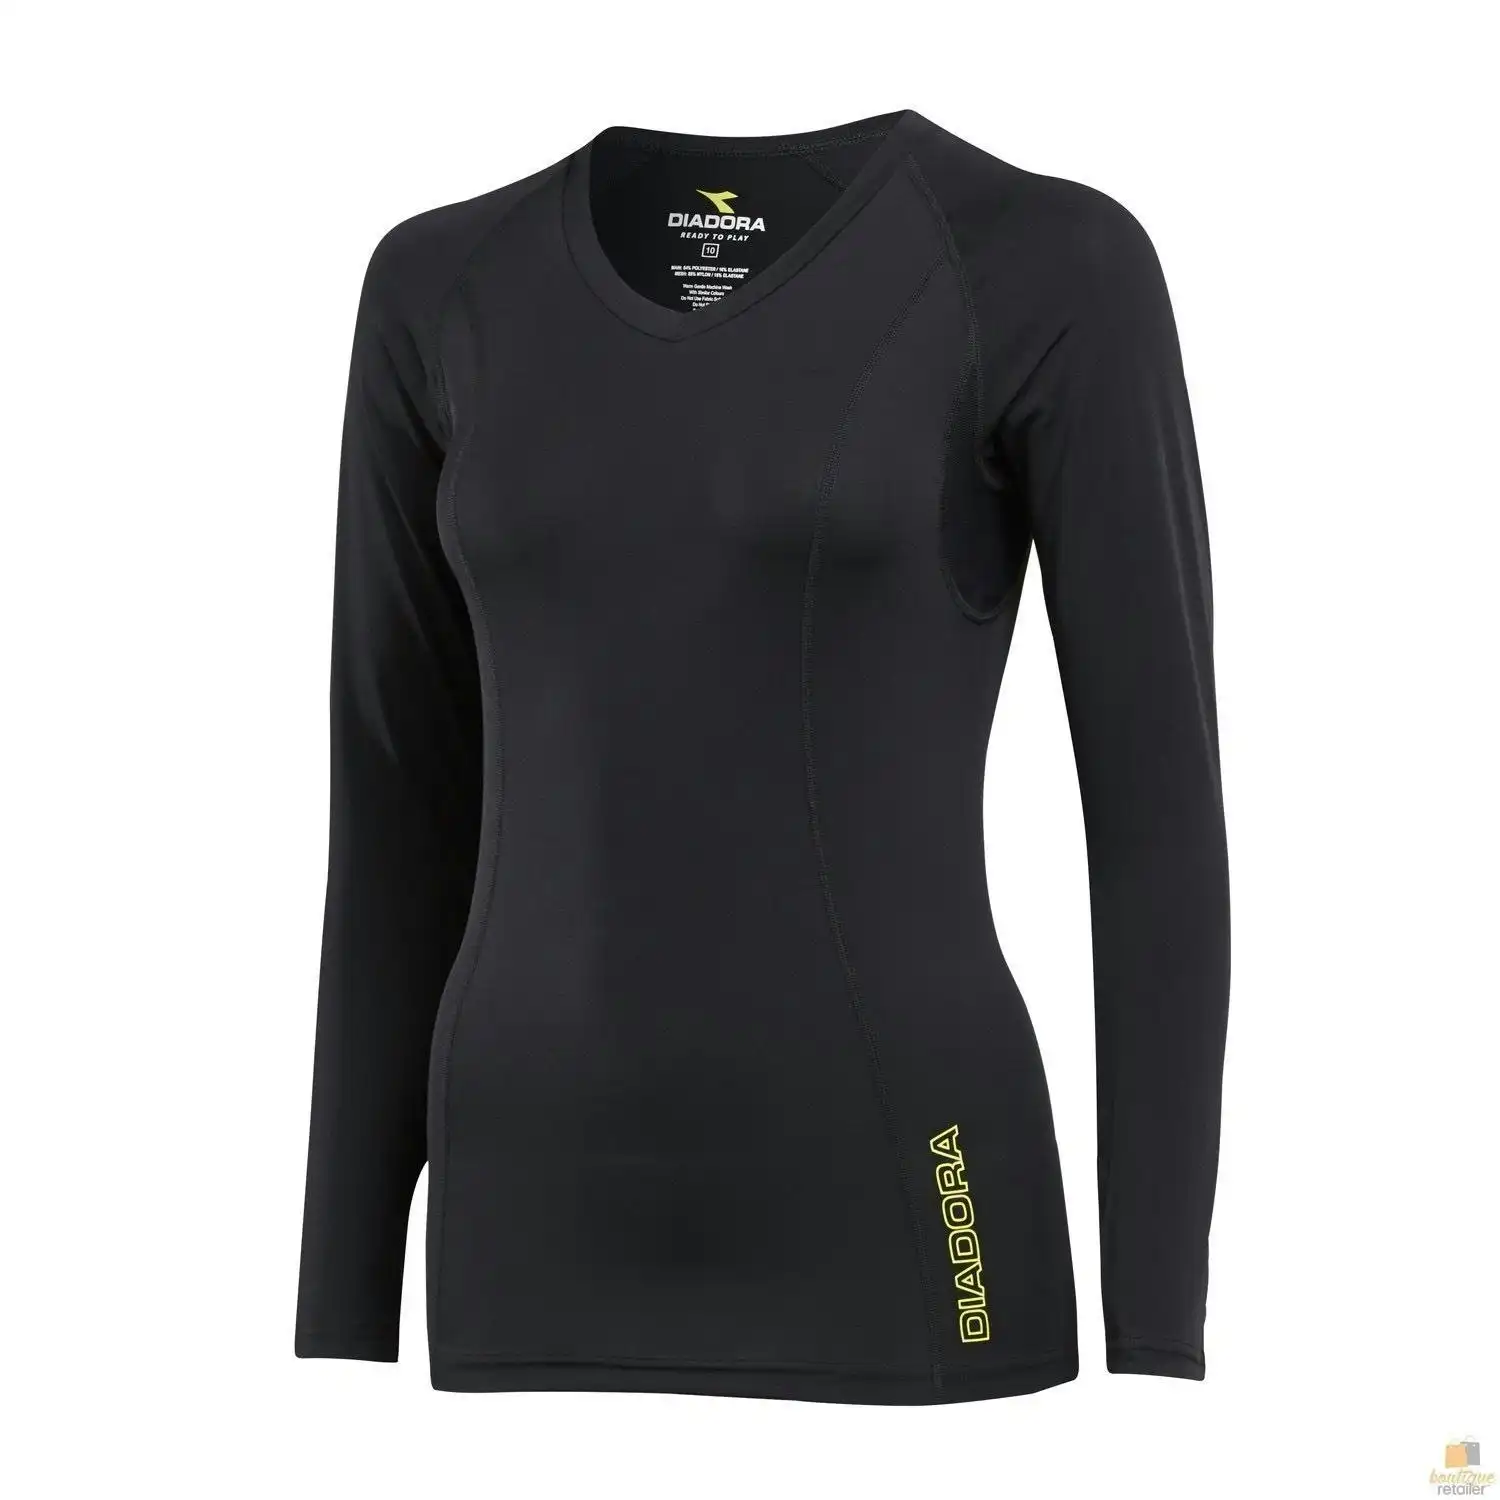 Diadora Ladies Compression Sports Thermal Long Sleeve Tee Top T Shirt - Black